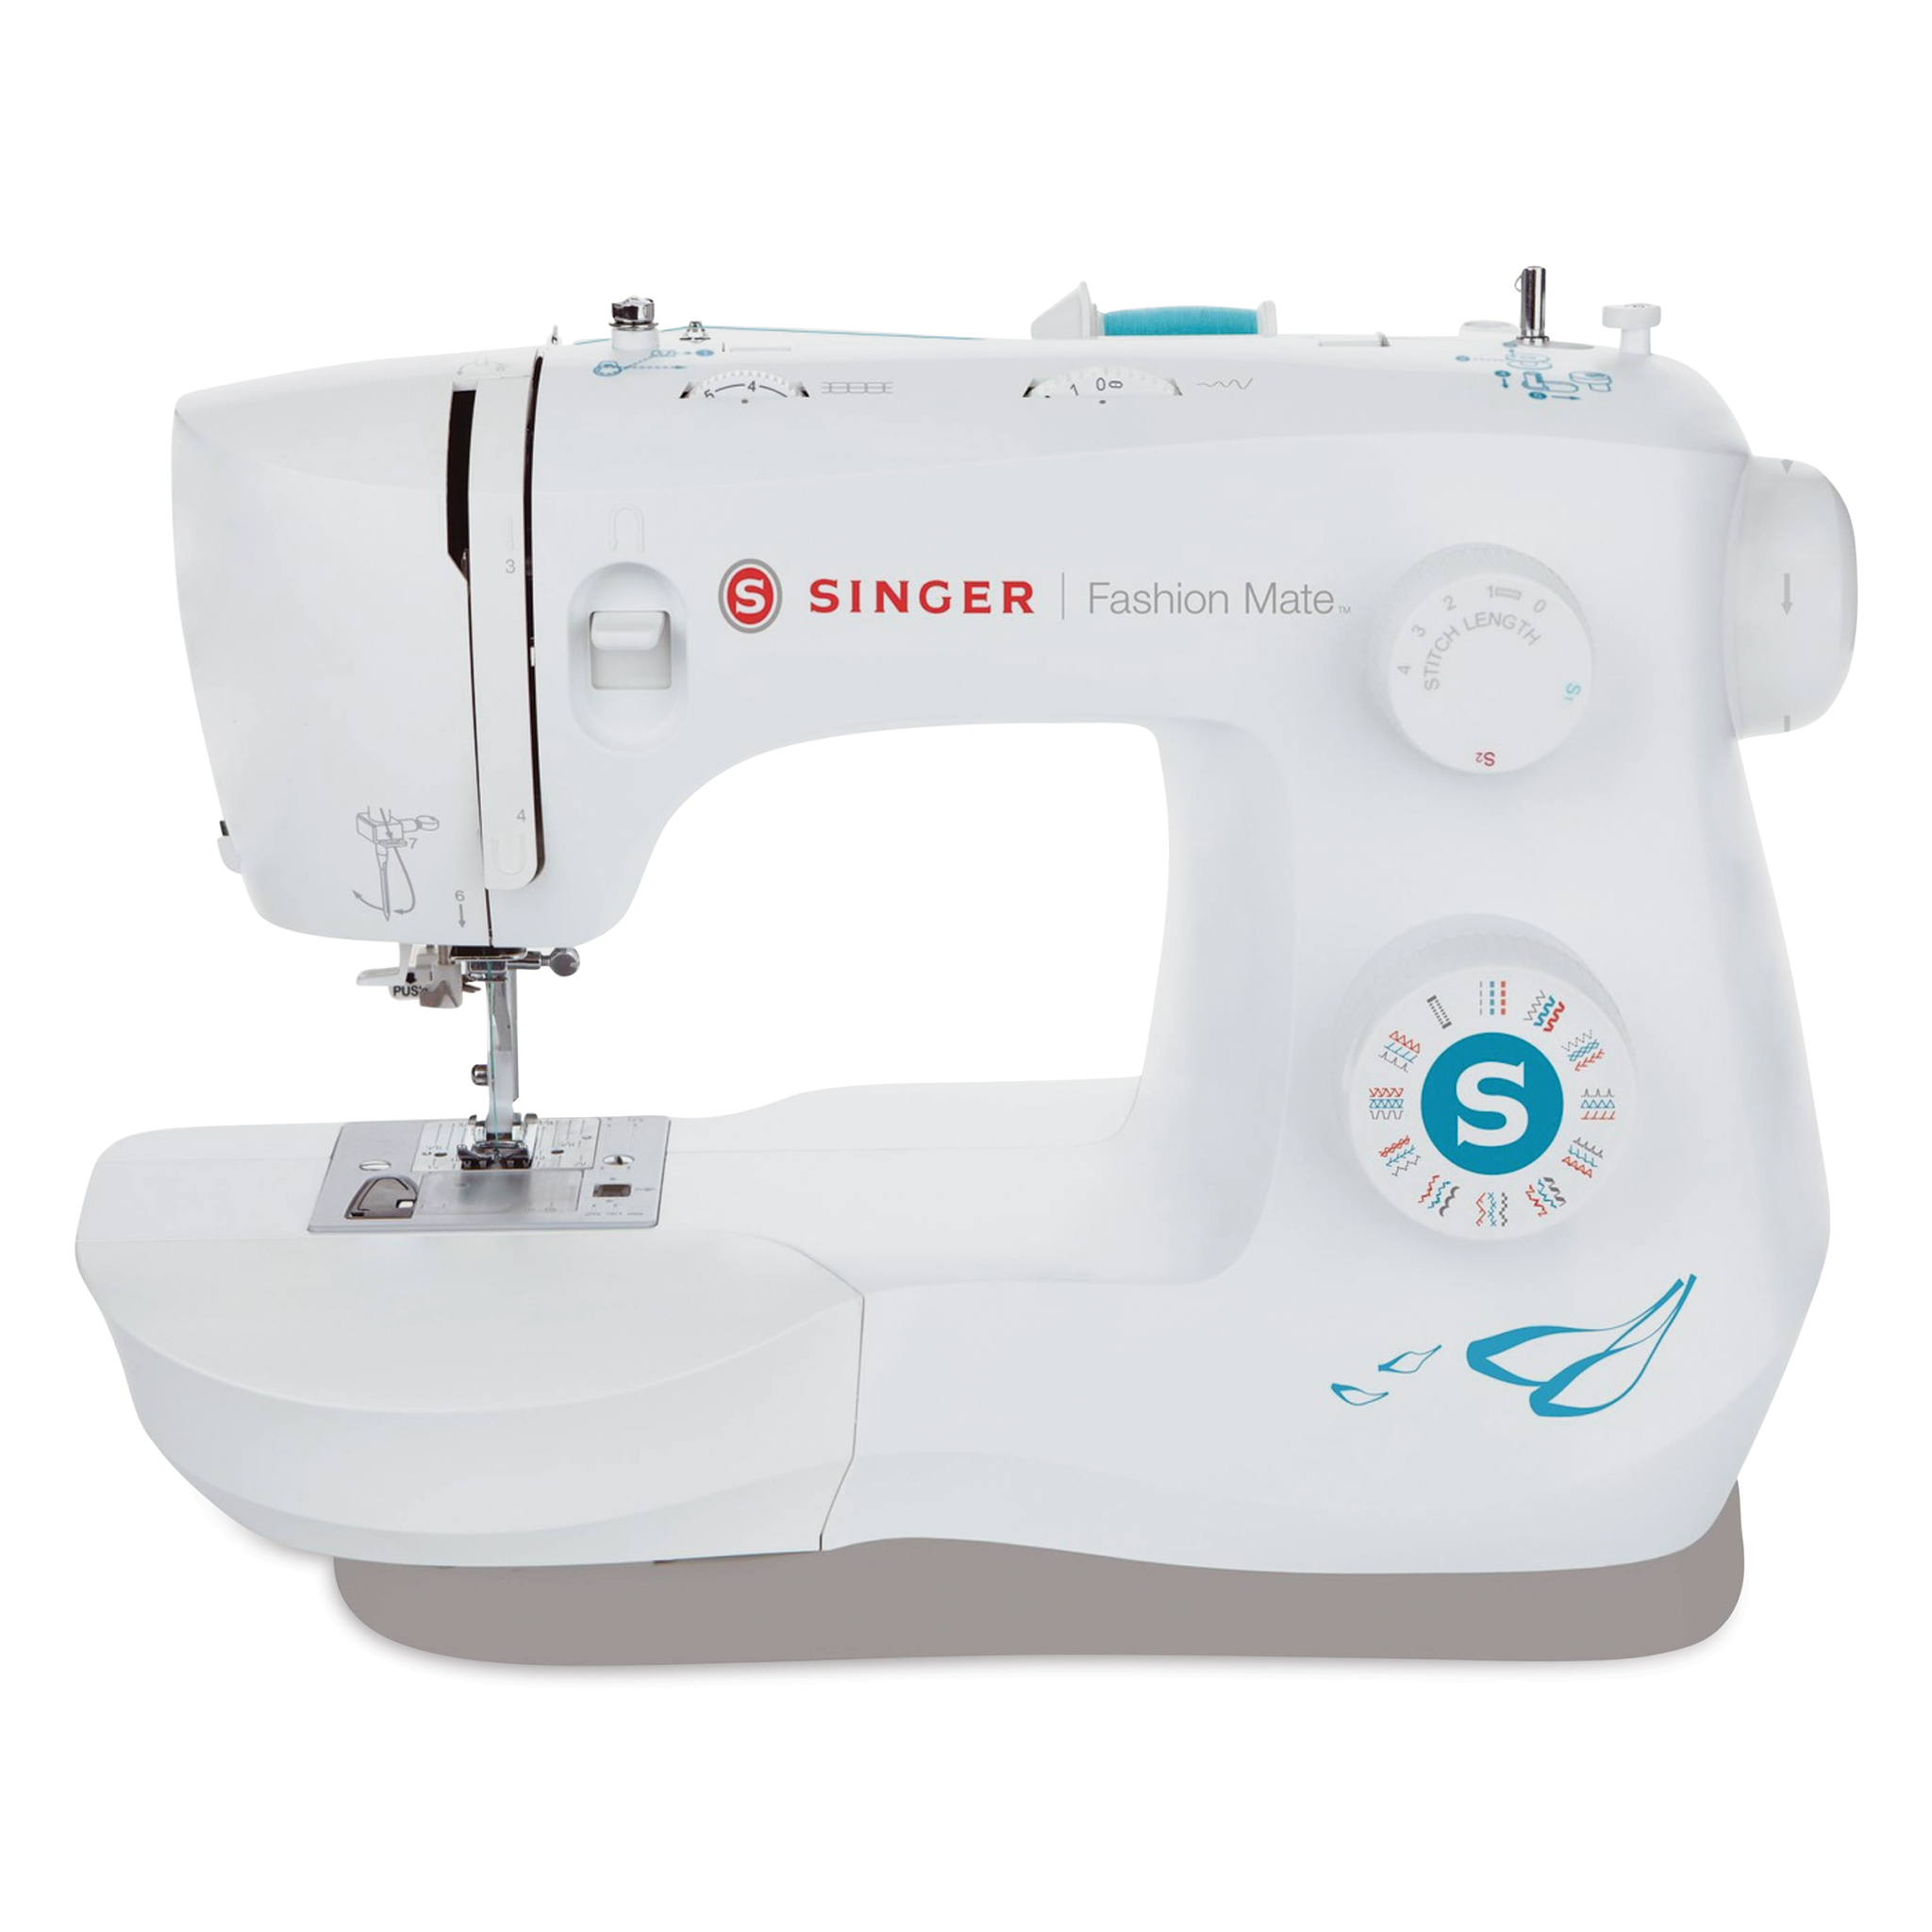 Singer M1250 57-Stitch Sewing Machine - White BRAND NEW